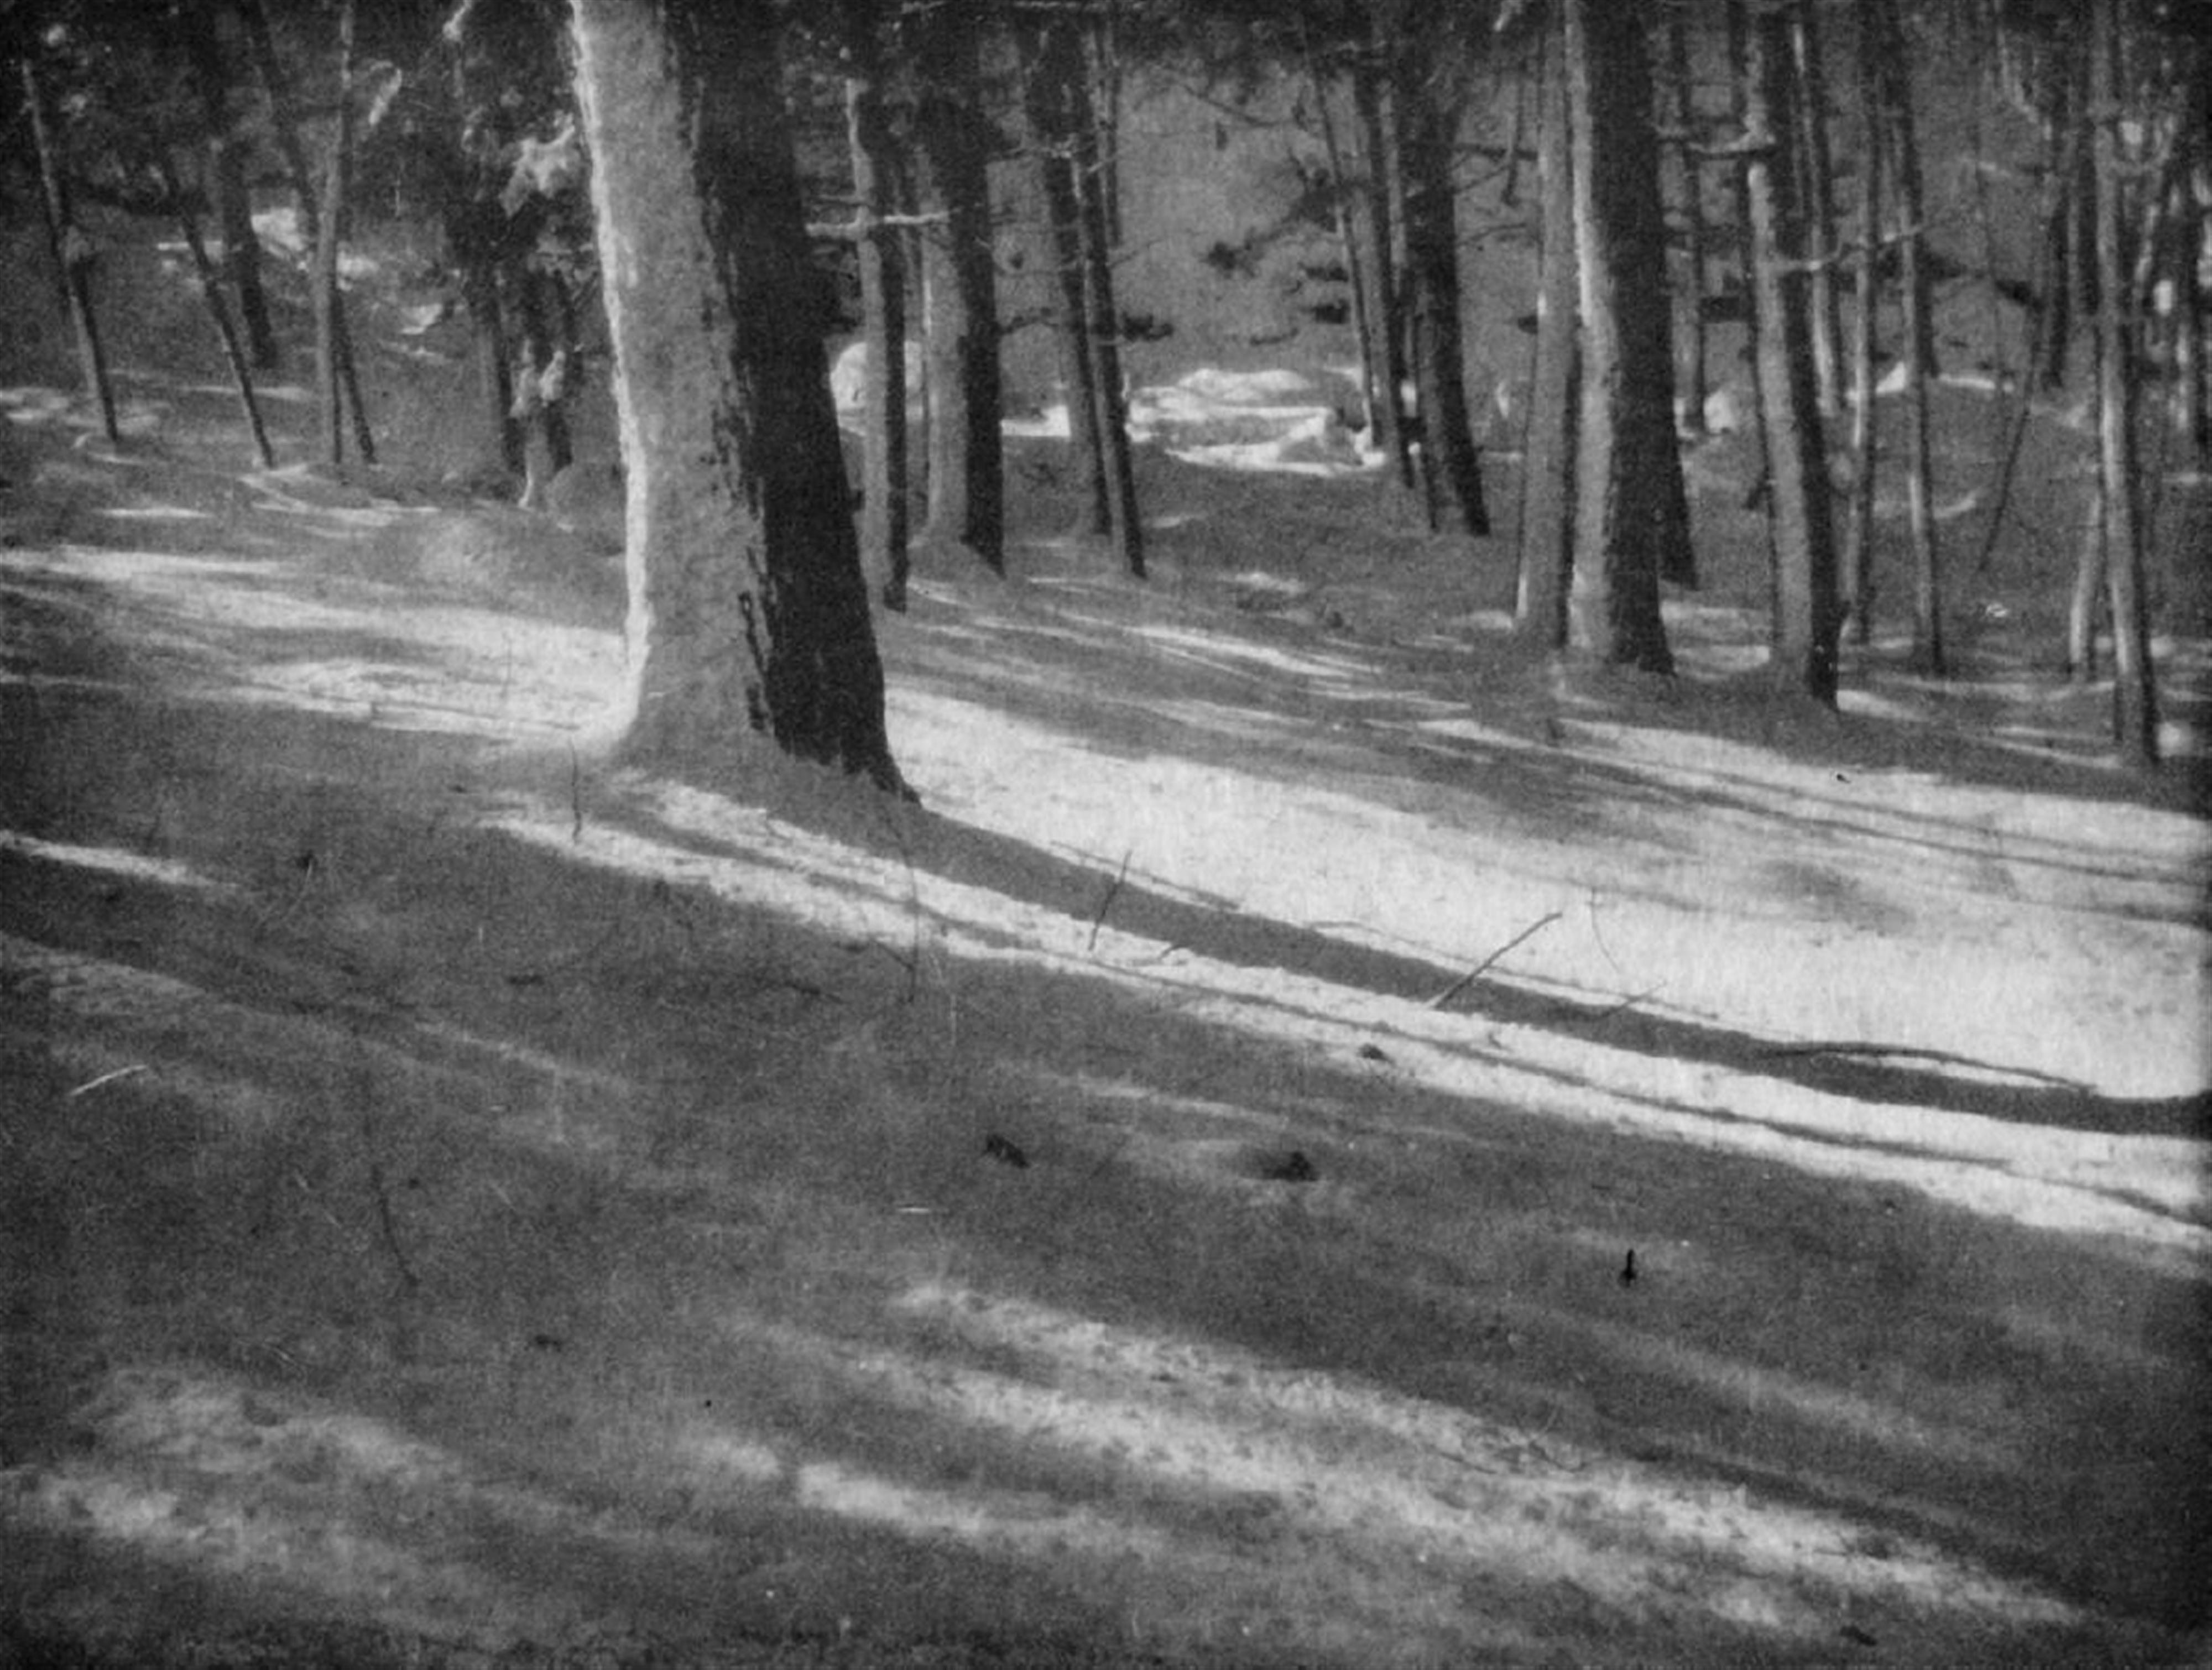 Camera Work / Alvin Langdon Coburn - Winter Shadows - image-1